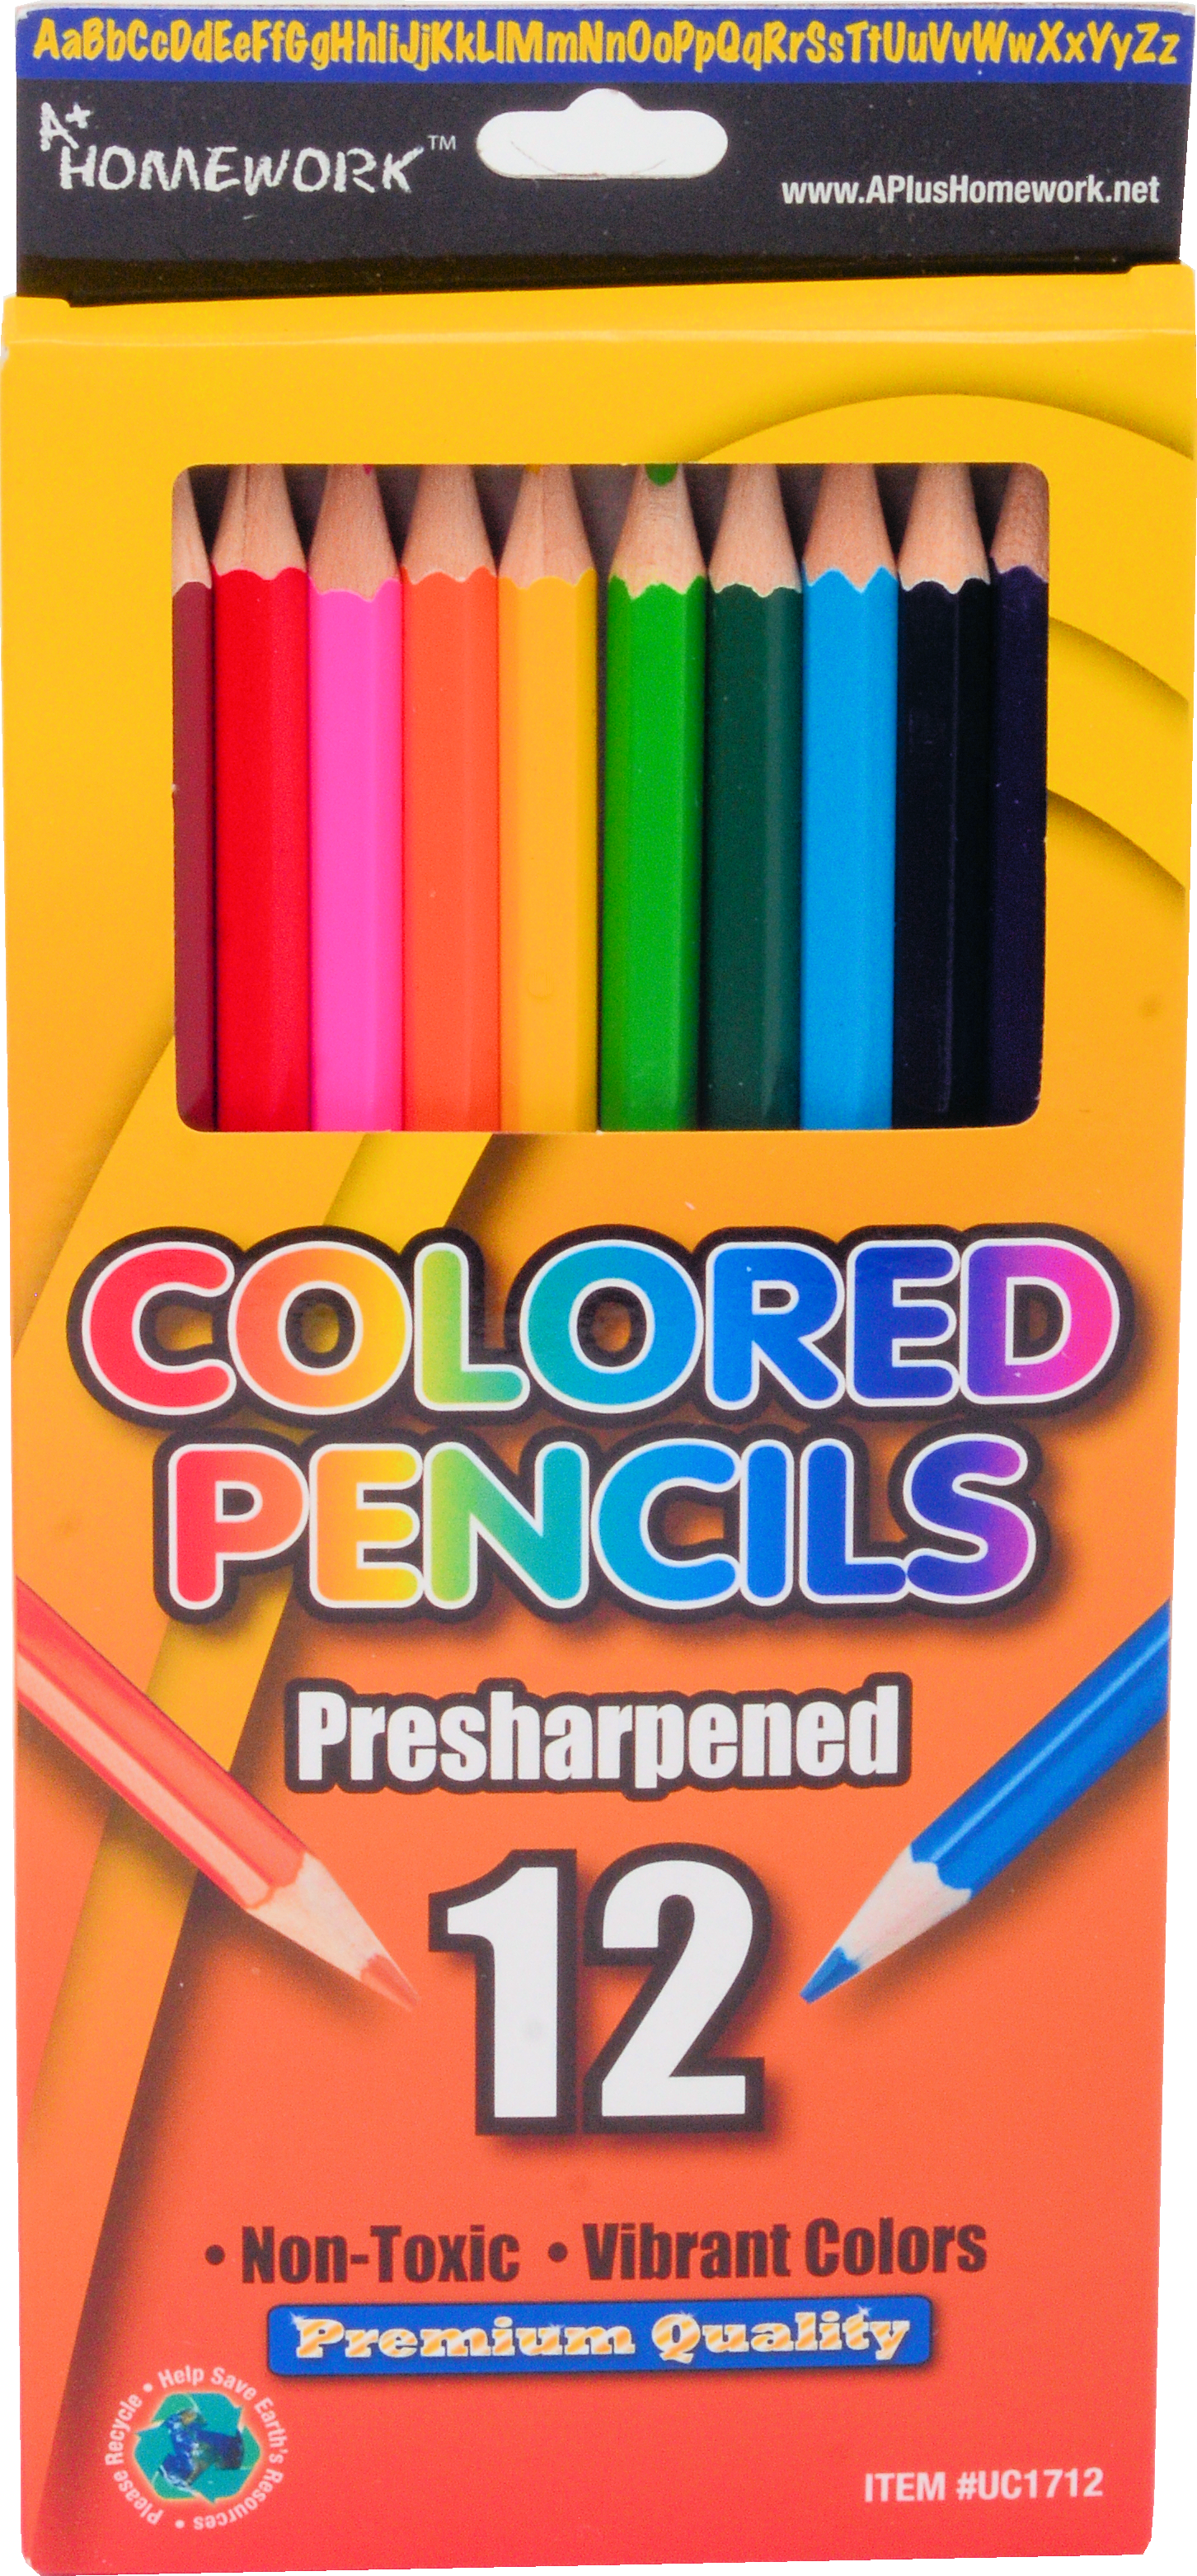 Colored Pencils - KS Gift Baskets